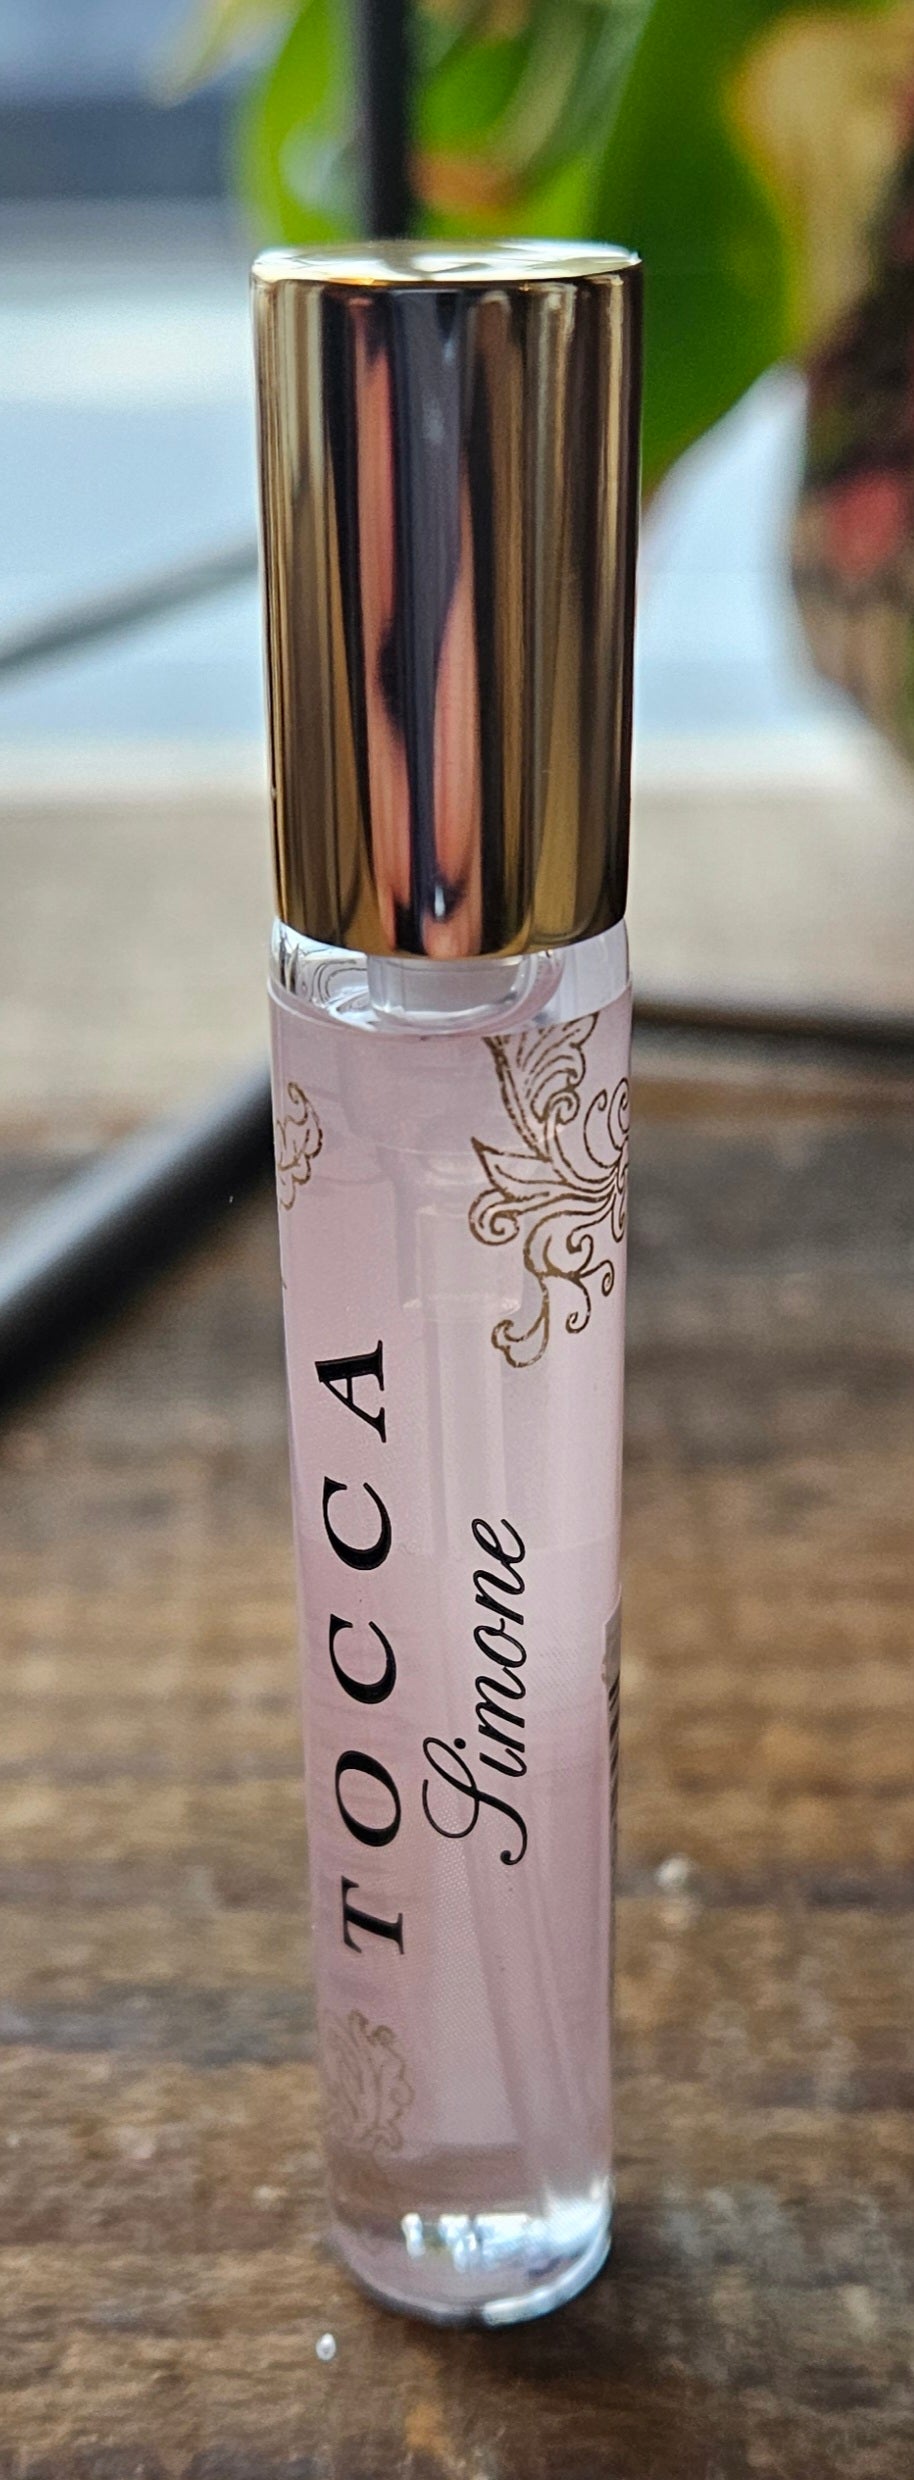 Tocca mini perfumes